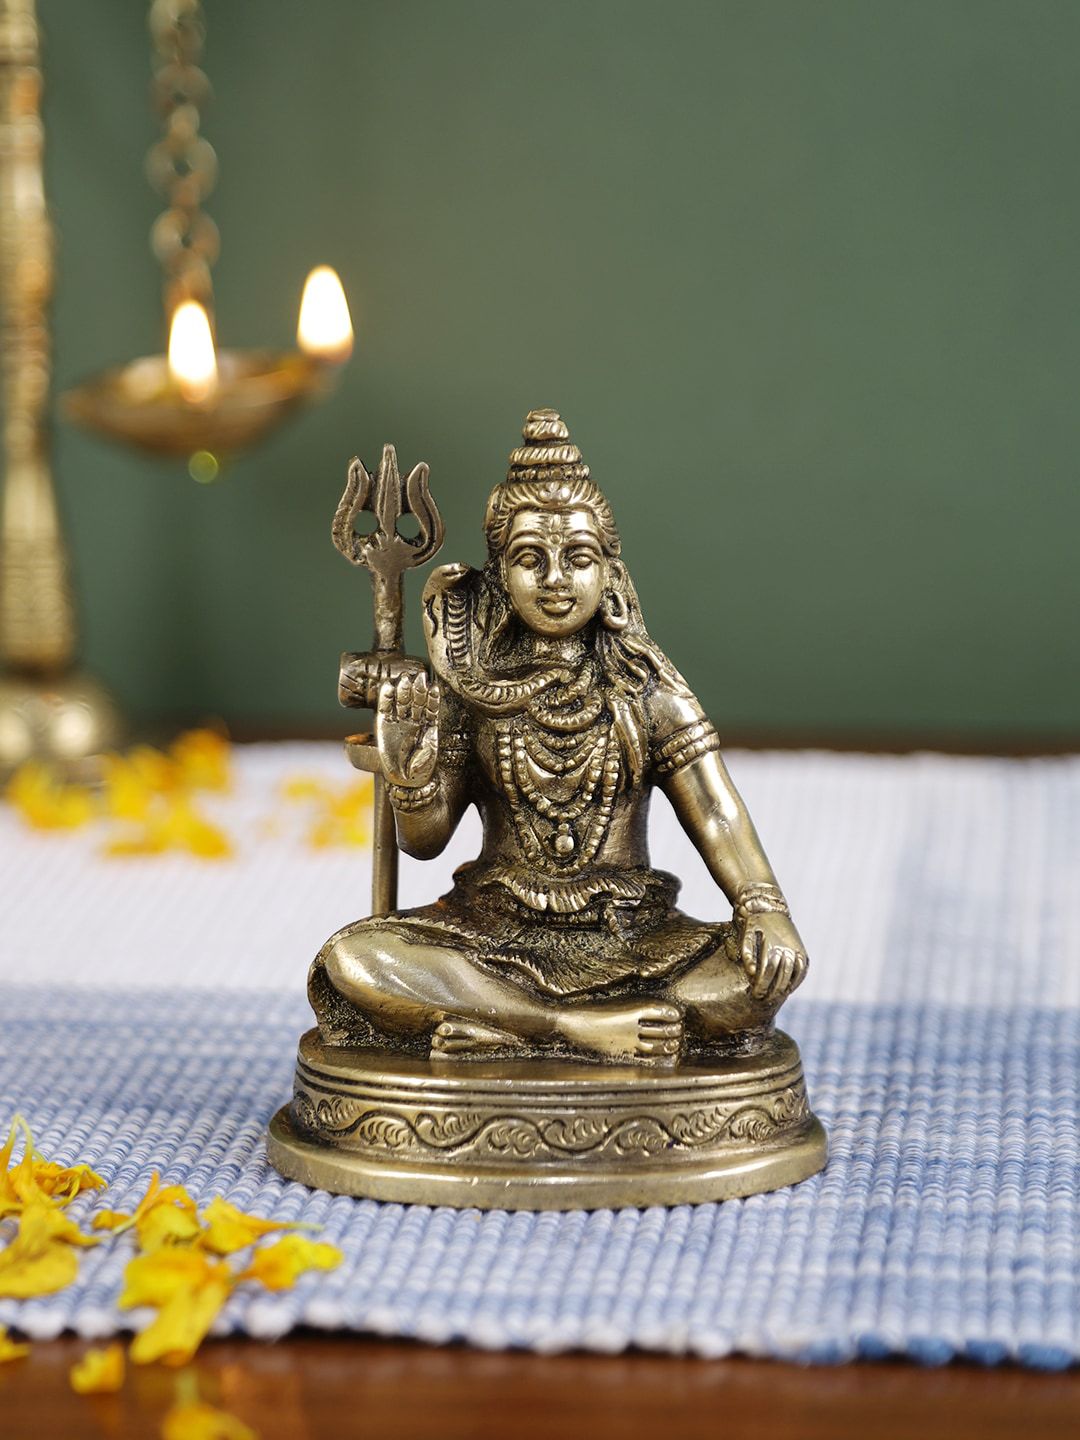 Imli Street Gold-Toned Shiva Showpiece Price in India